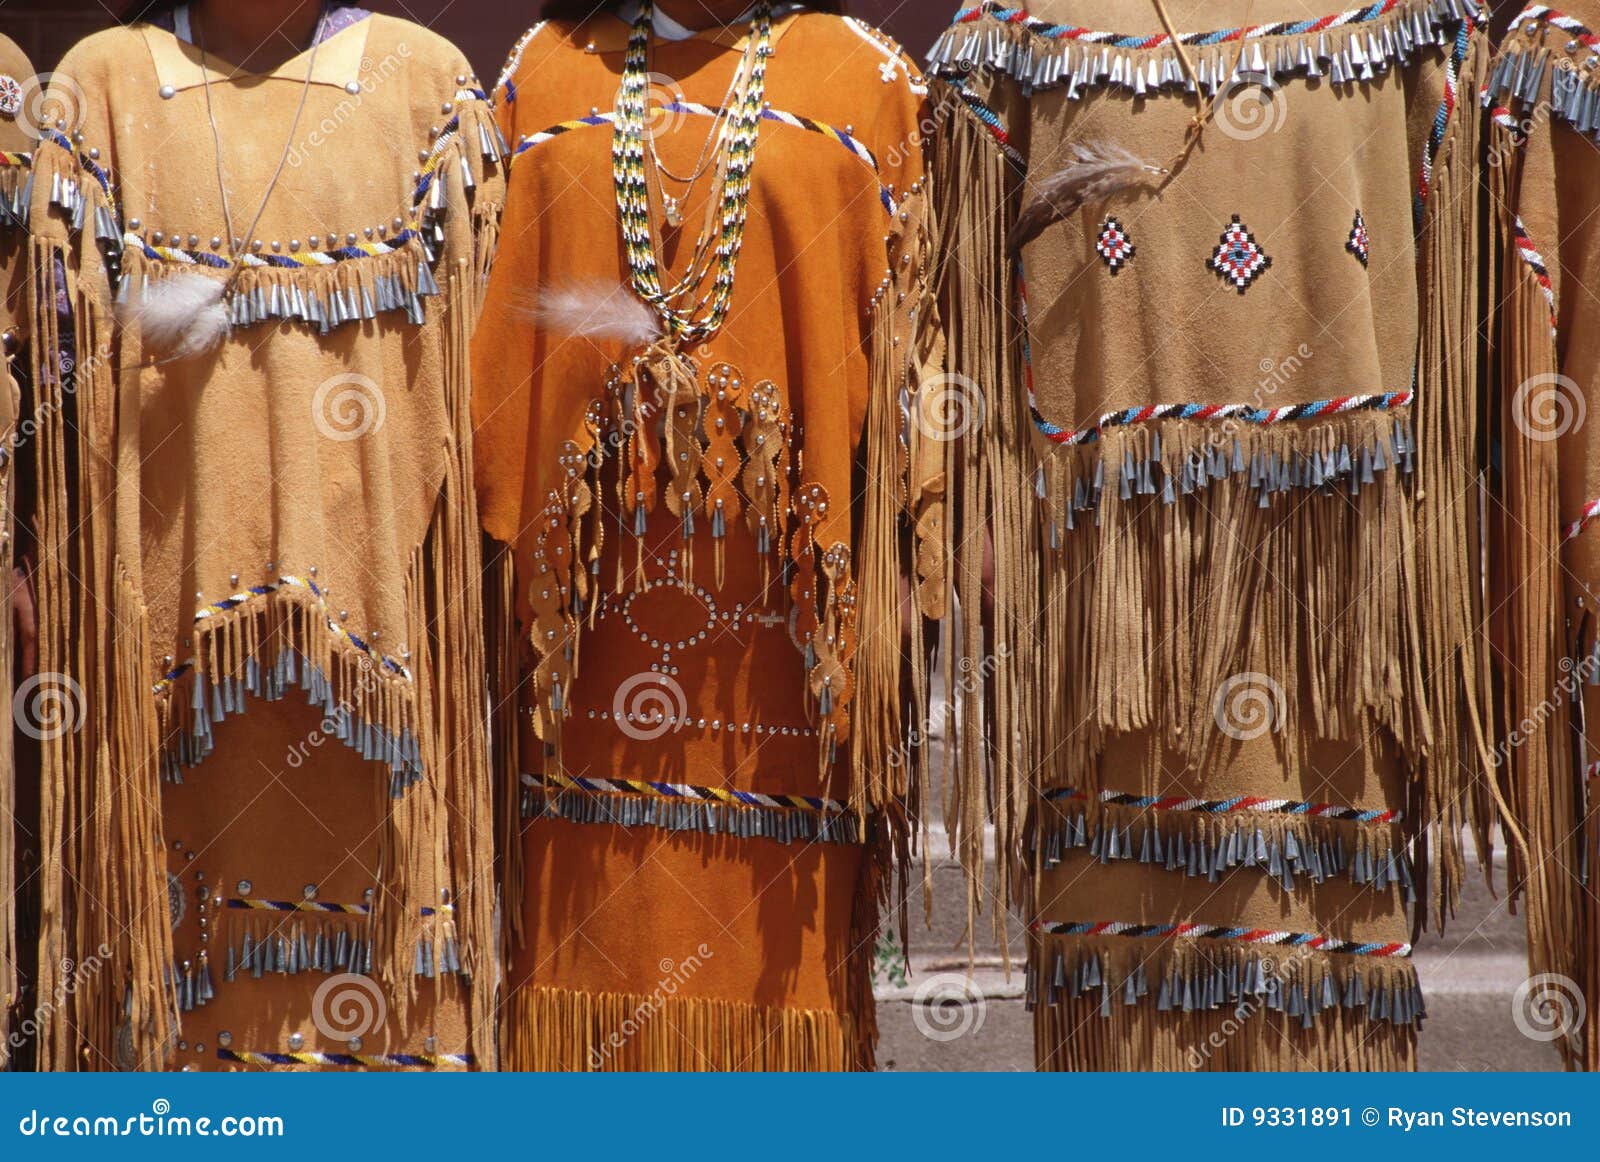 Native Indian Dresses stock image ...